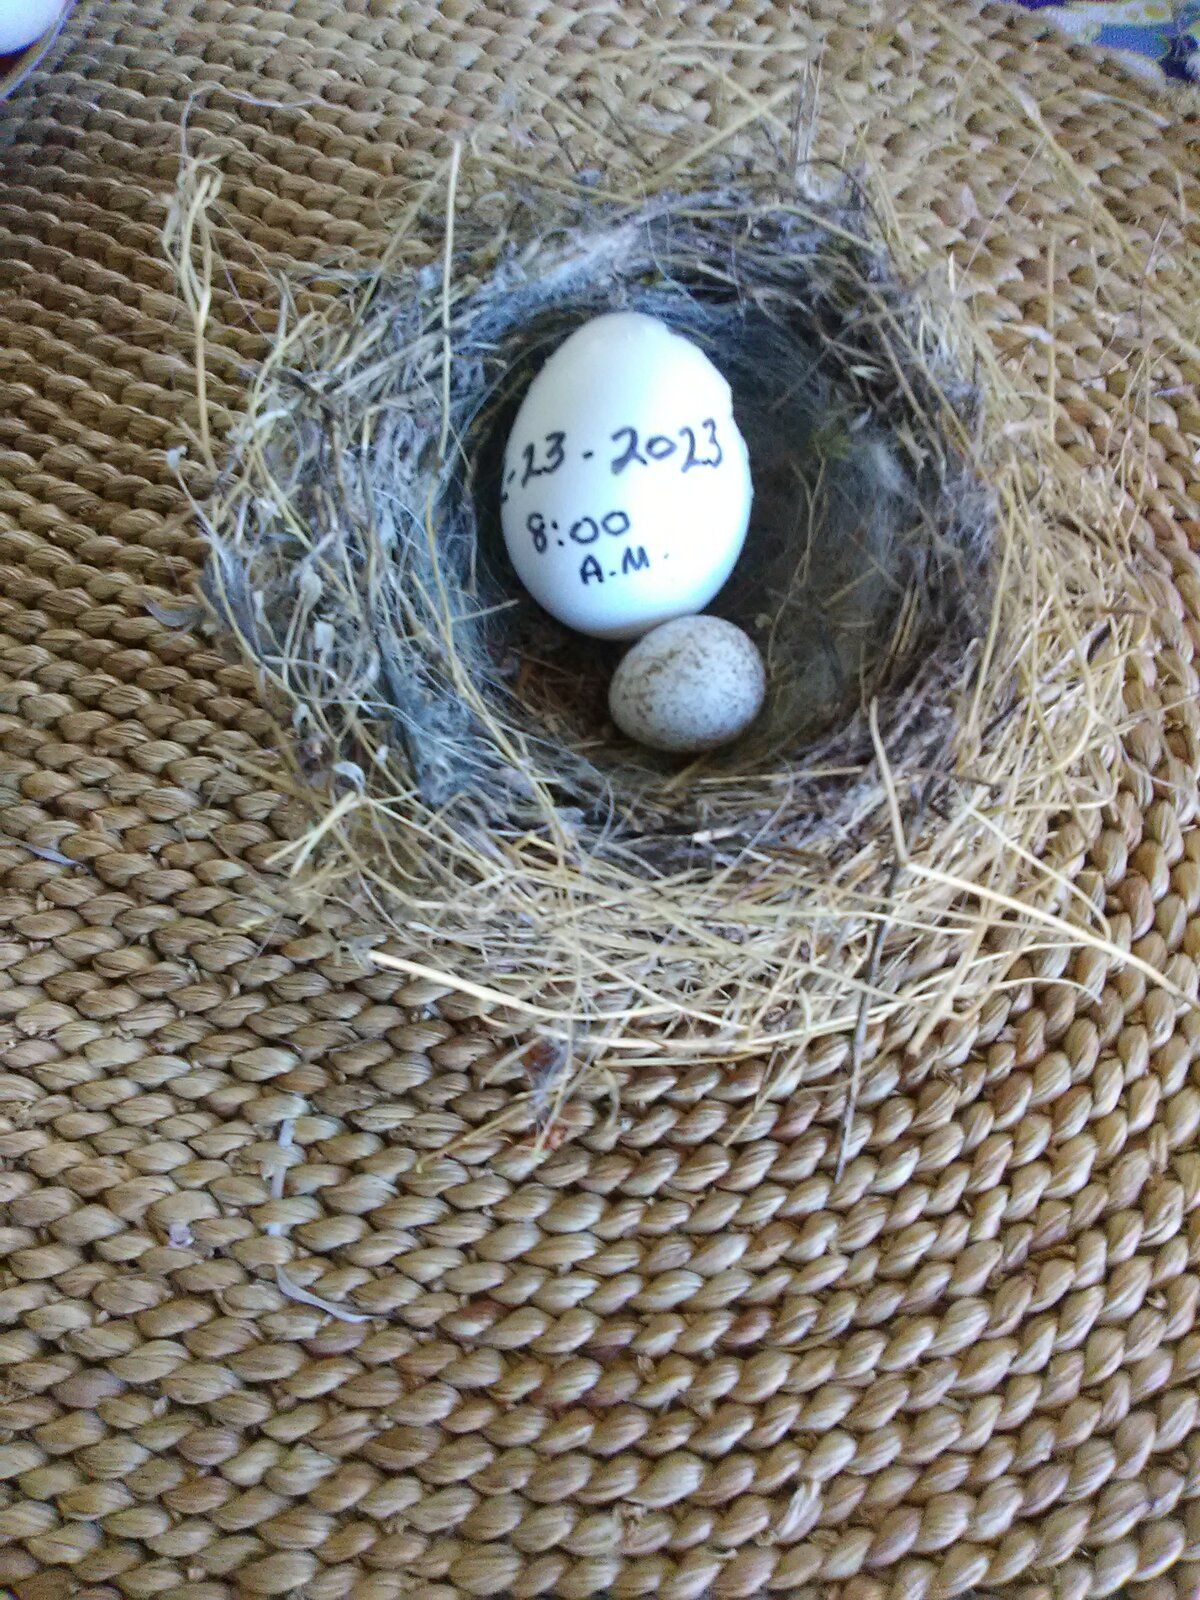 Jingles egg: Congo AG egg against a wild bird egg.